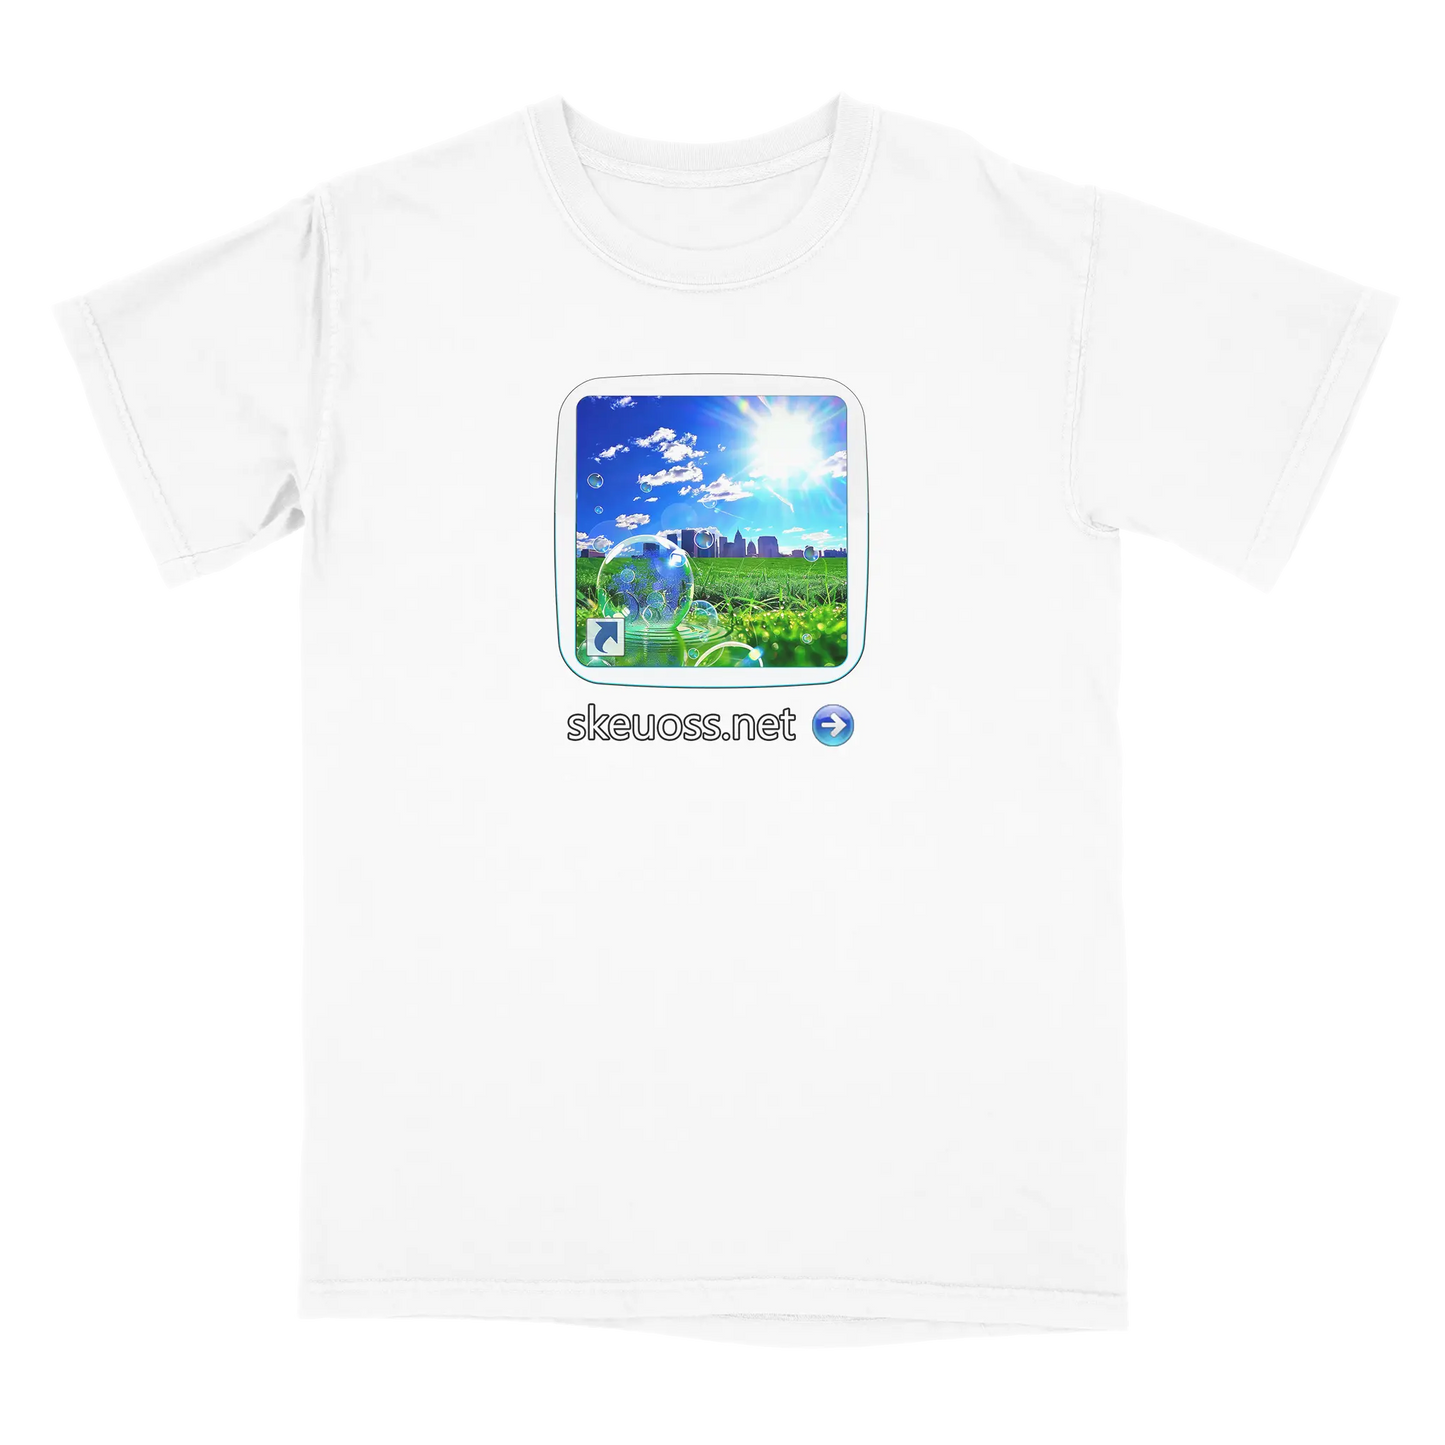 Frutiger Aero T-shirt - User Login Collection - User 265